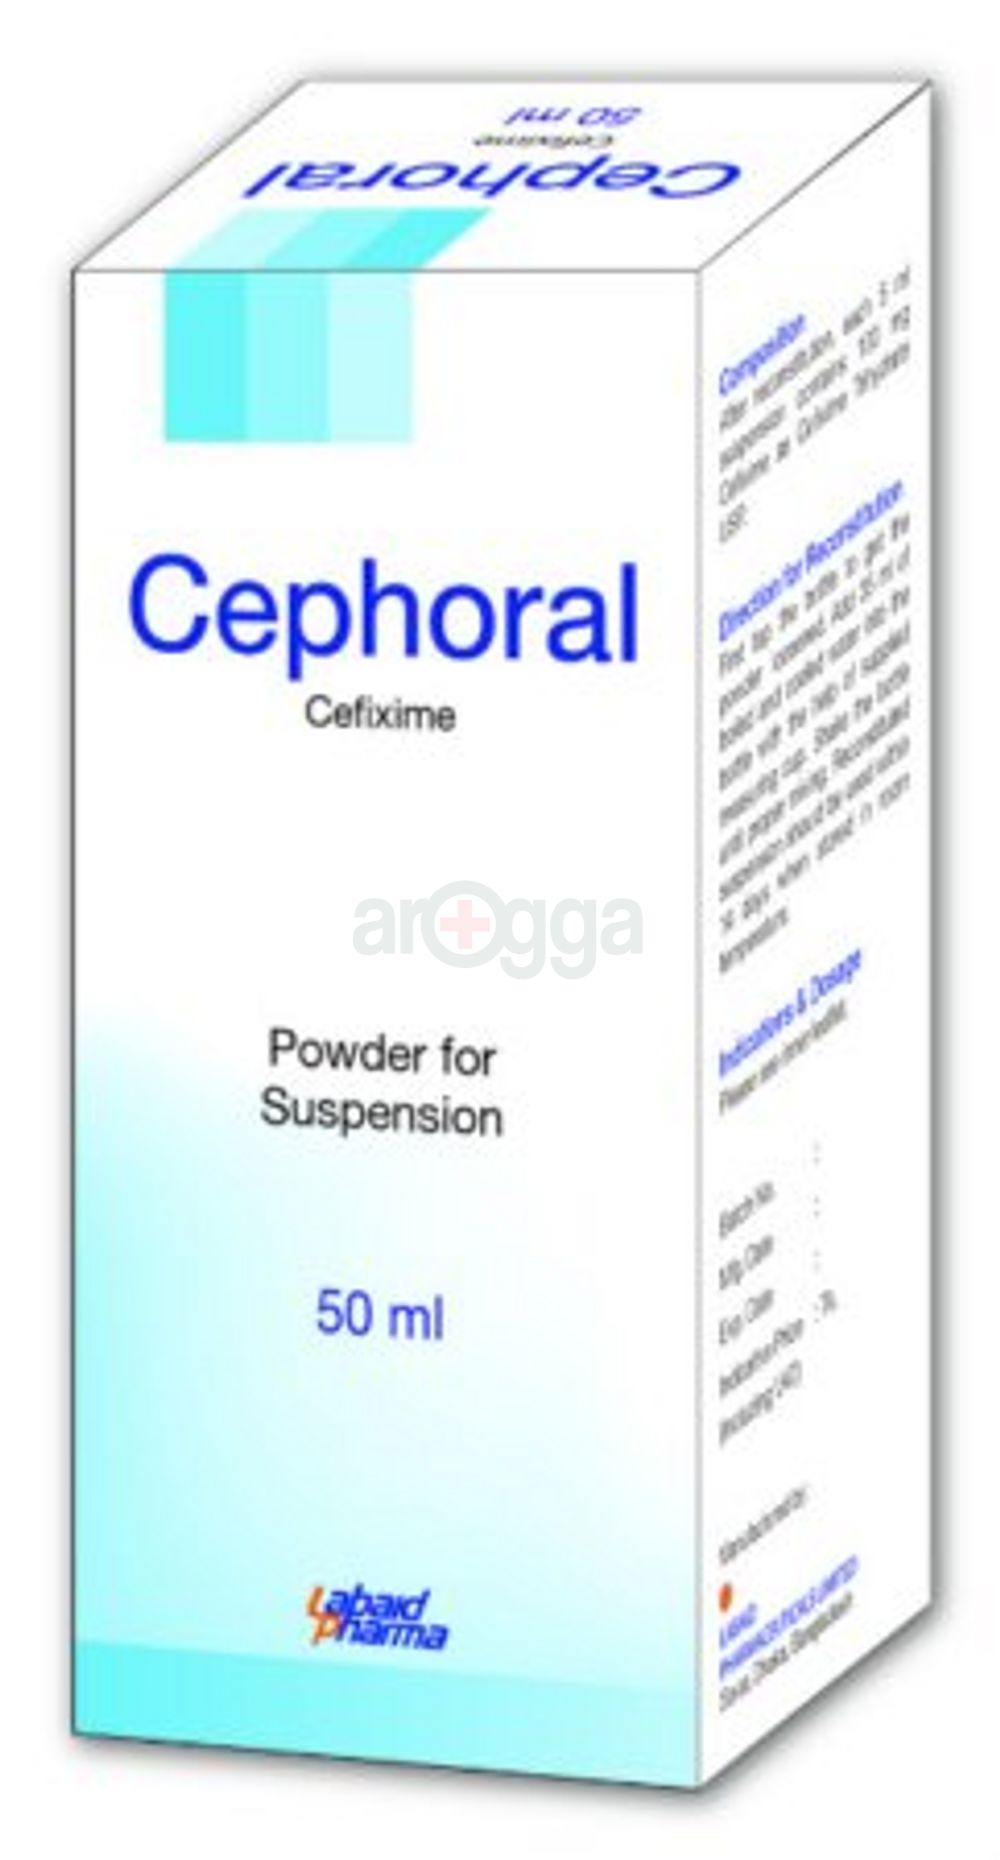 Cephoral